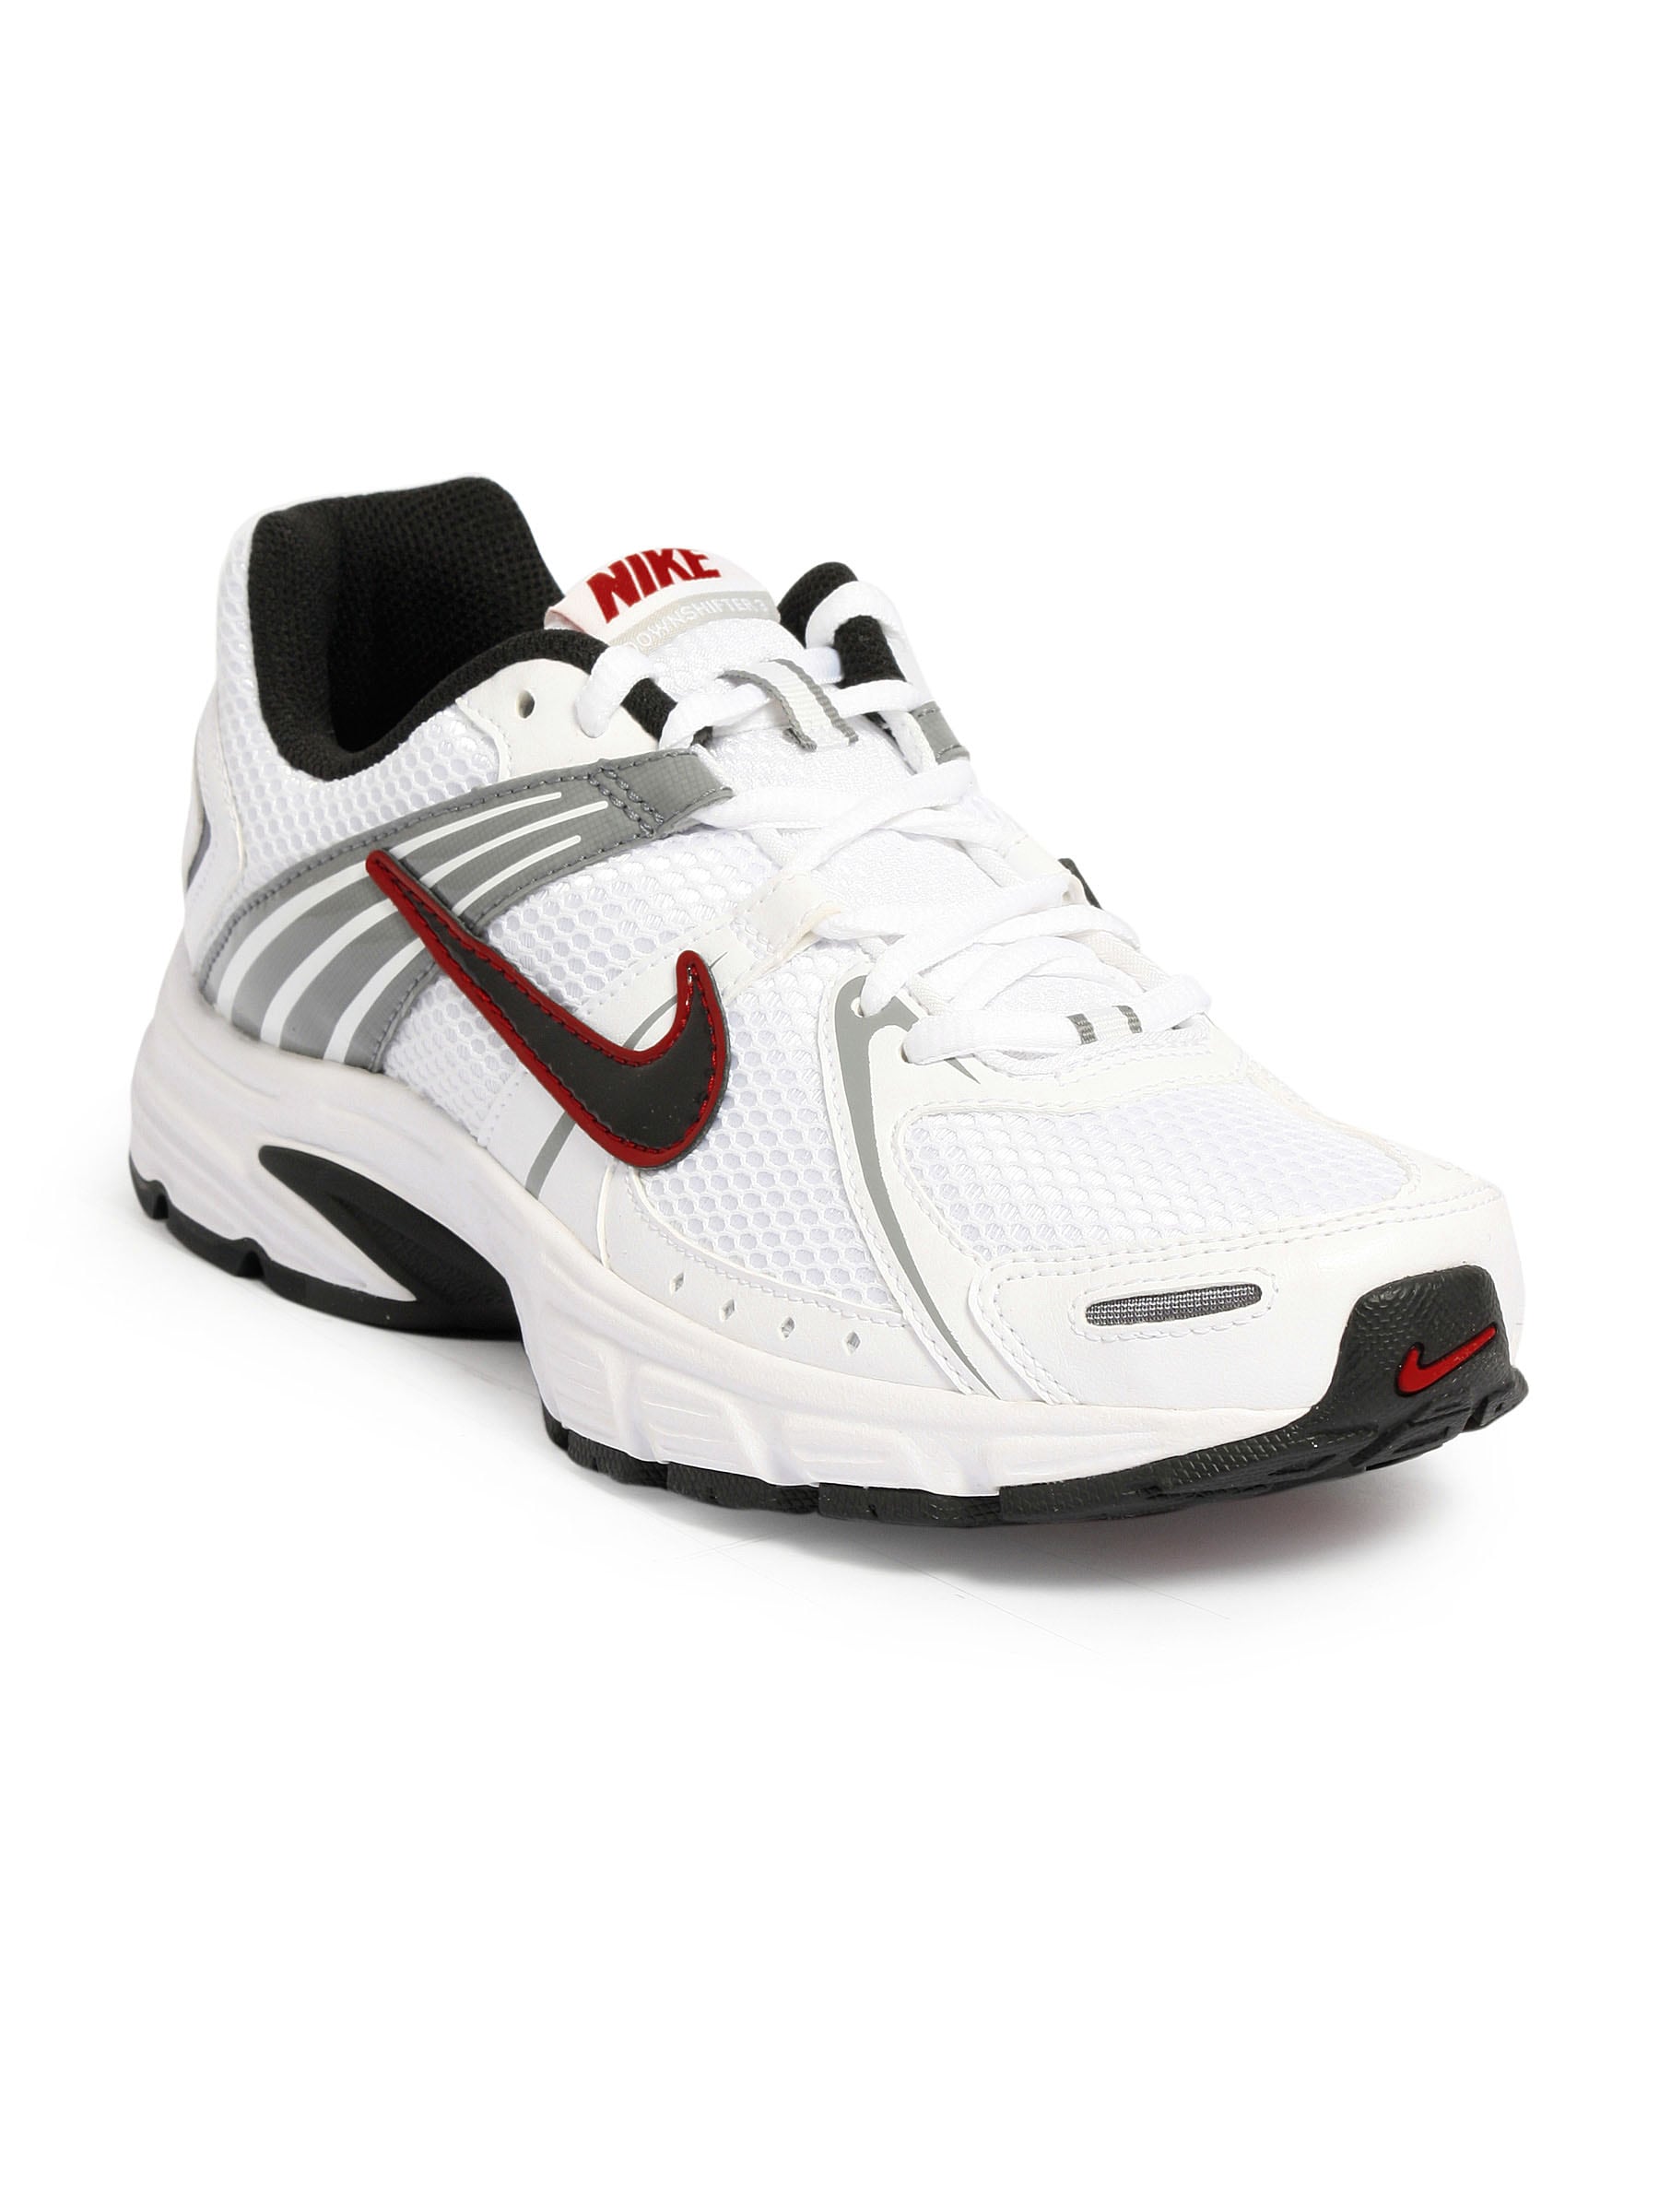 Nike Men Downshifter 3MSL White Sports Shoes